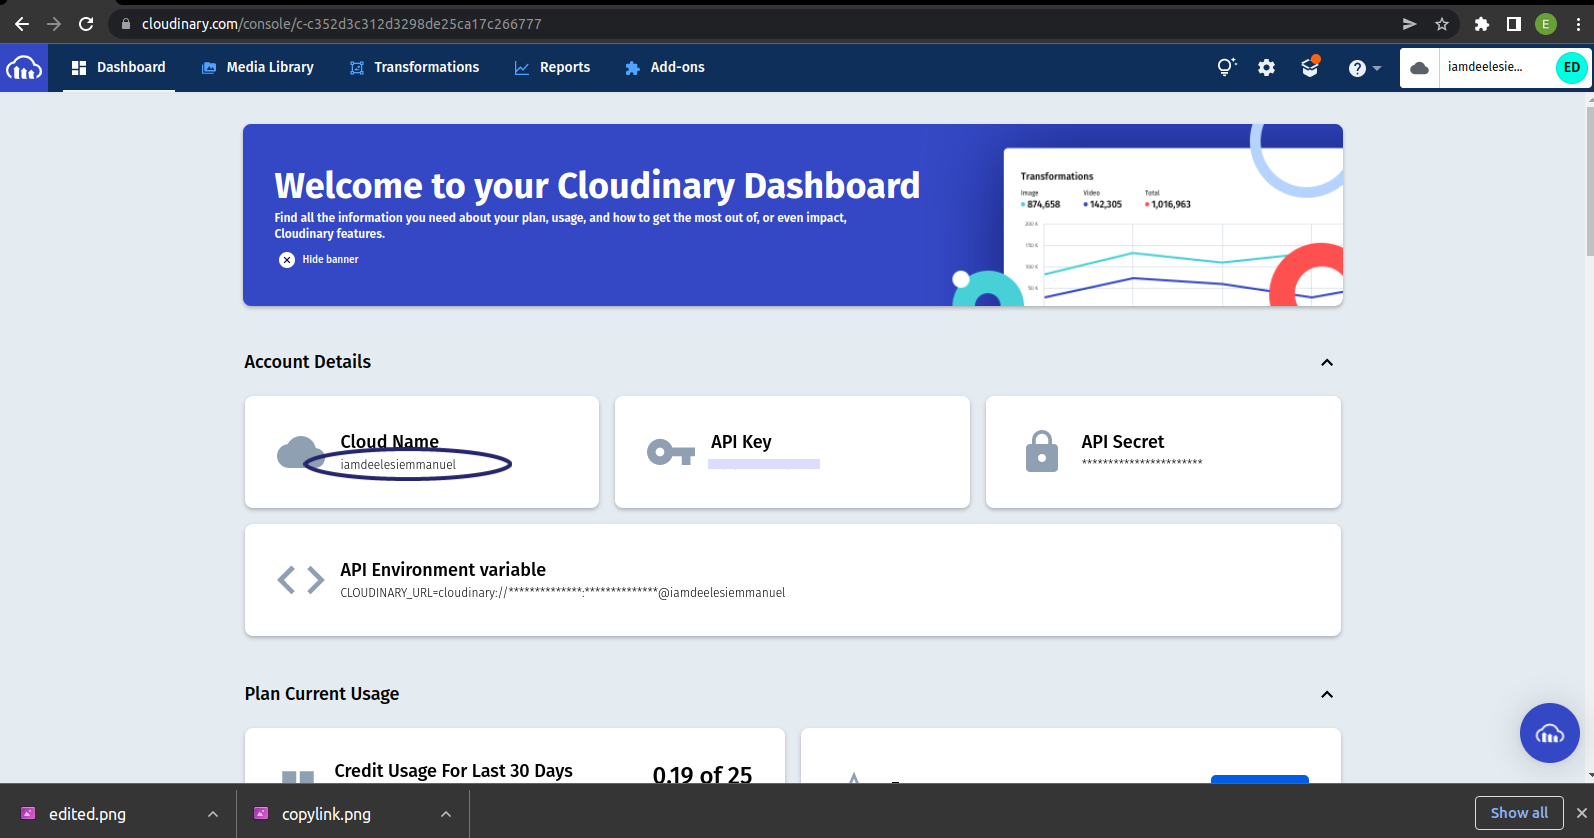 Cloudinary Dashboard page displaying Cloud Name